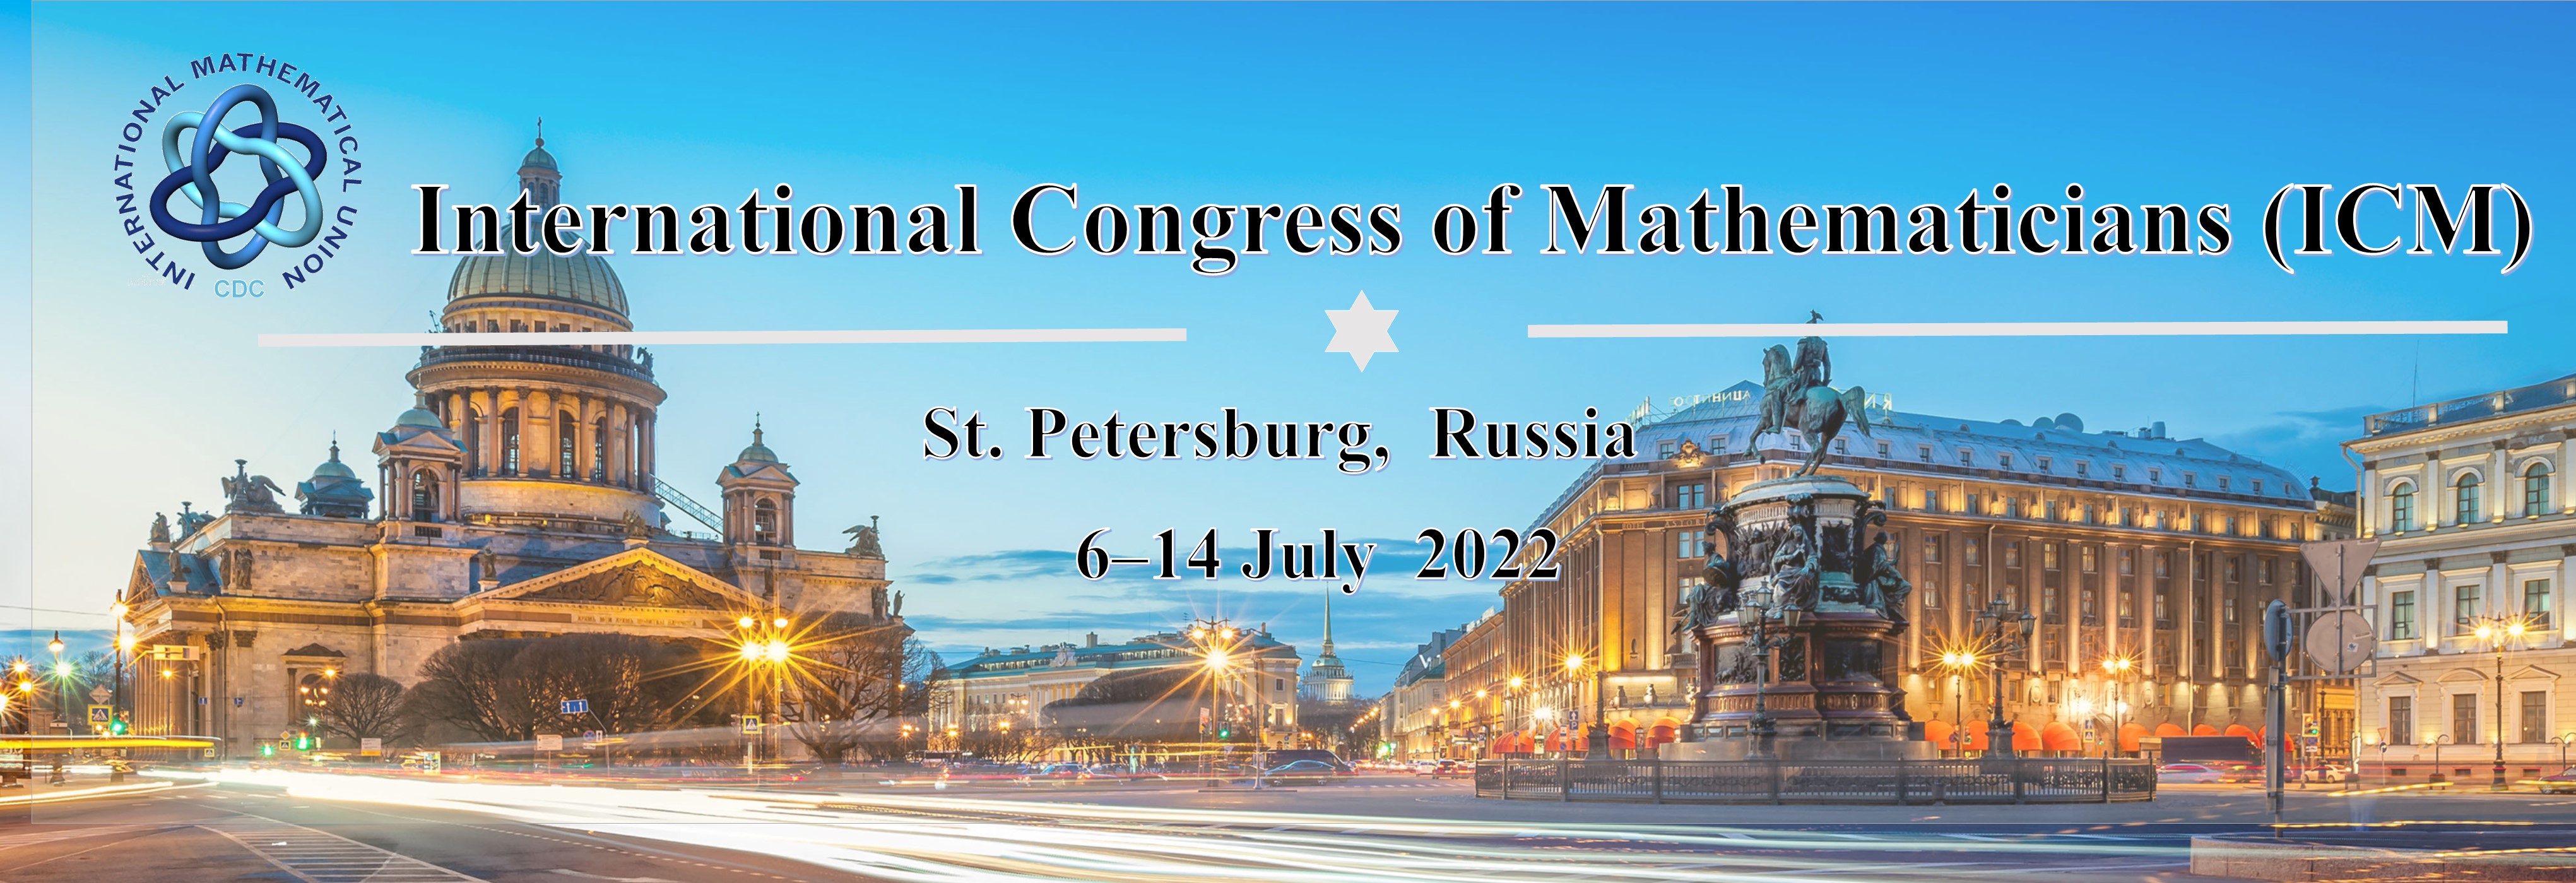 International Congress of Mathematicians (ICM)